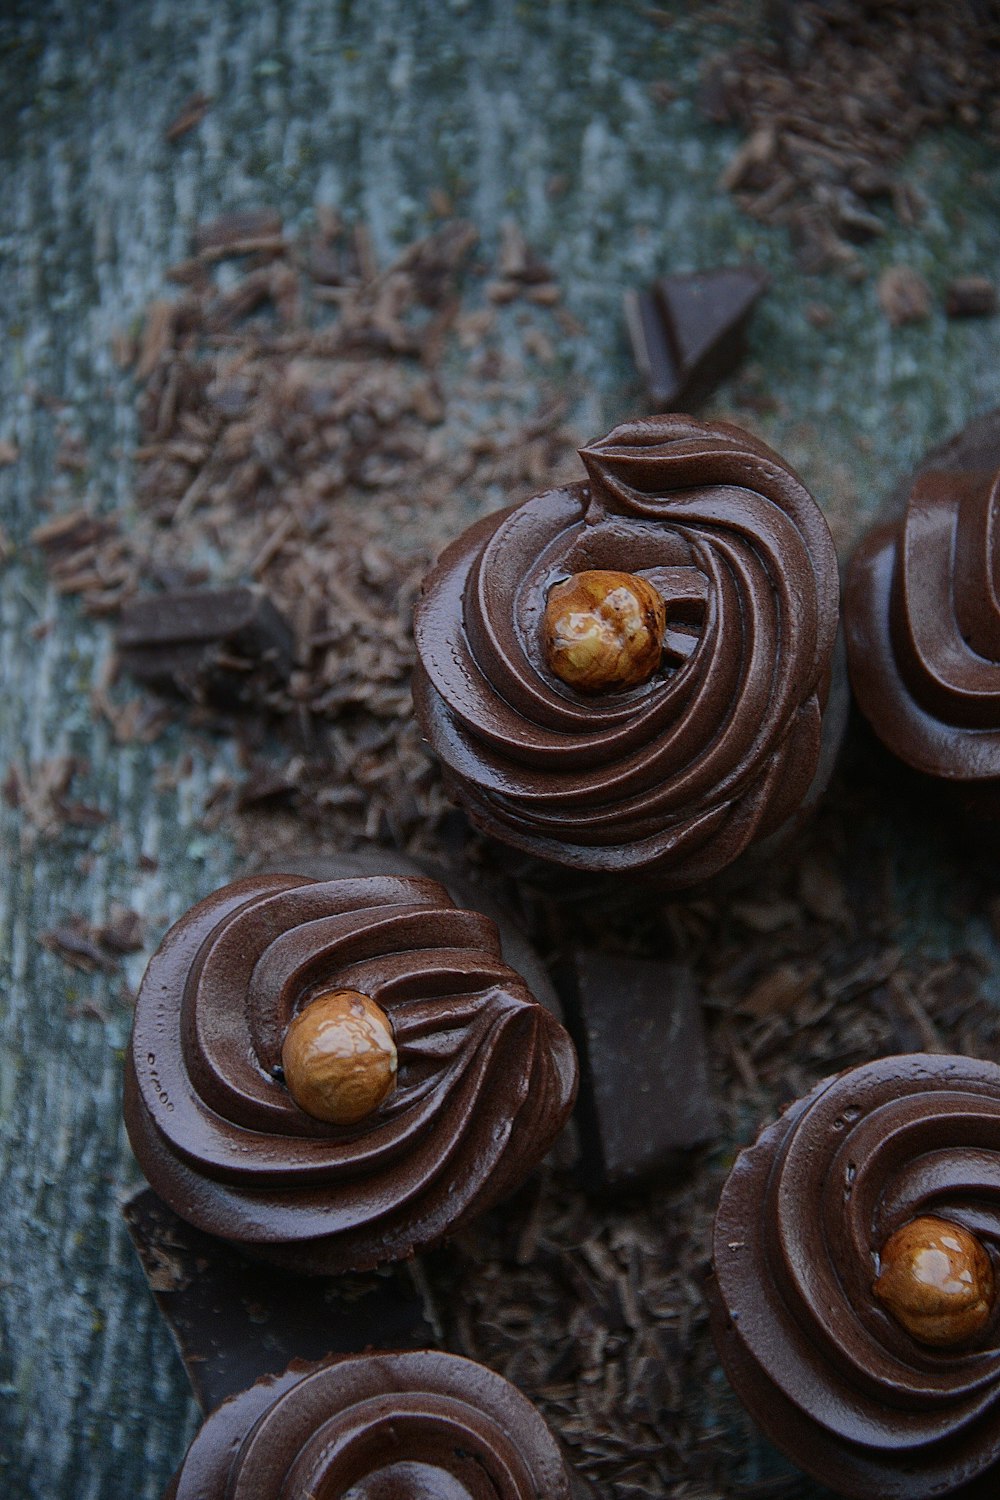 a group of brown mushrooms